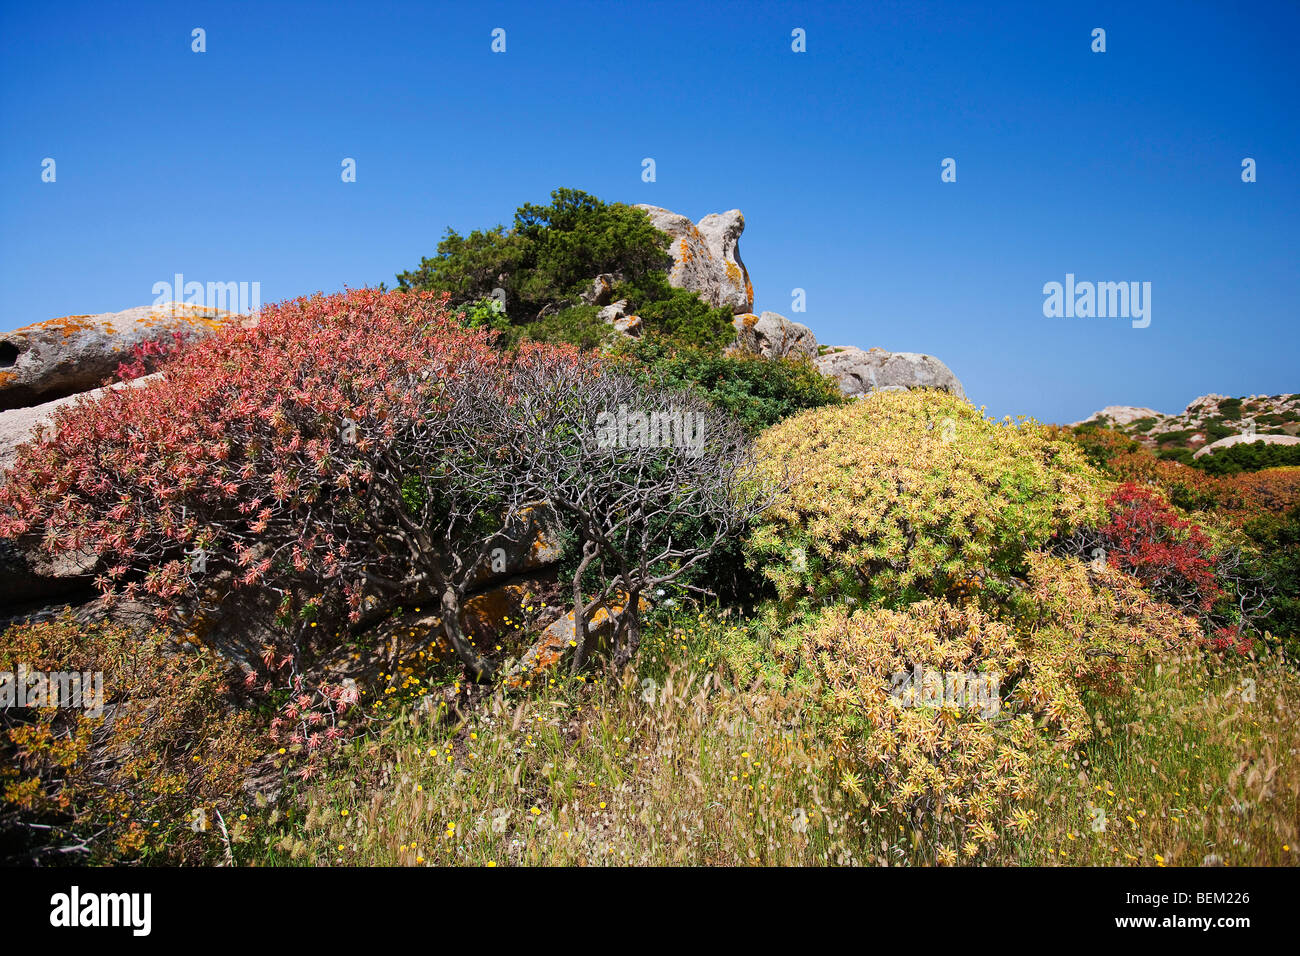 The mediterranean shrubby of the island, Asinara Island, Asinara National Park, Sardinia, Italy, Europe Stock Photo